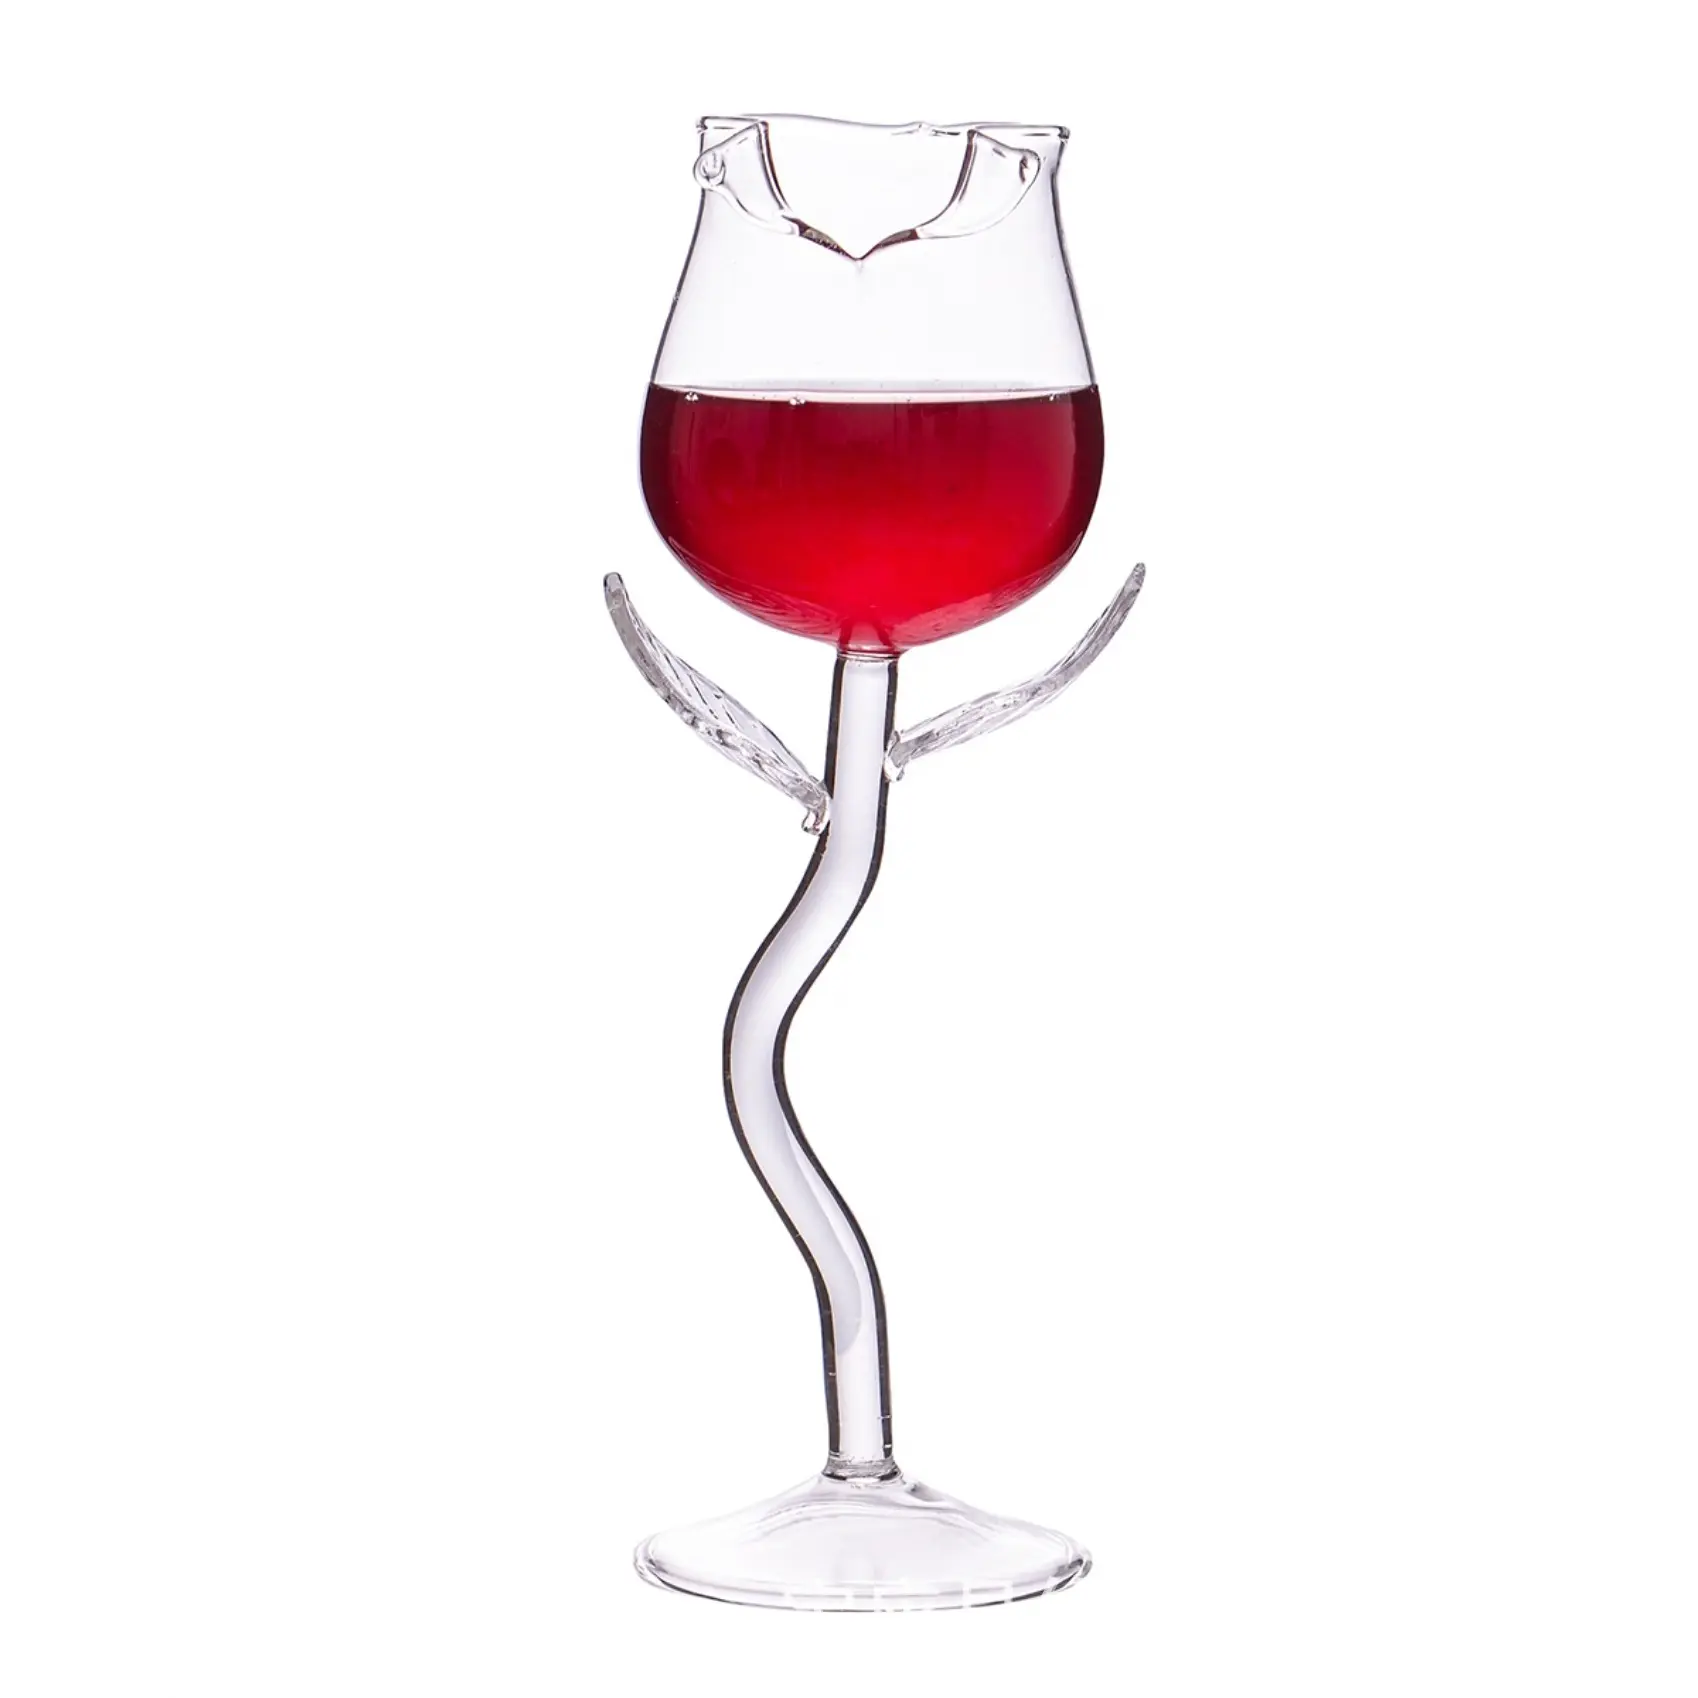 Creative ייחודי עיצוב עלה צורת קריסטל אלגנטי זכוכית כוס יין אדום משקפיים